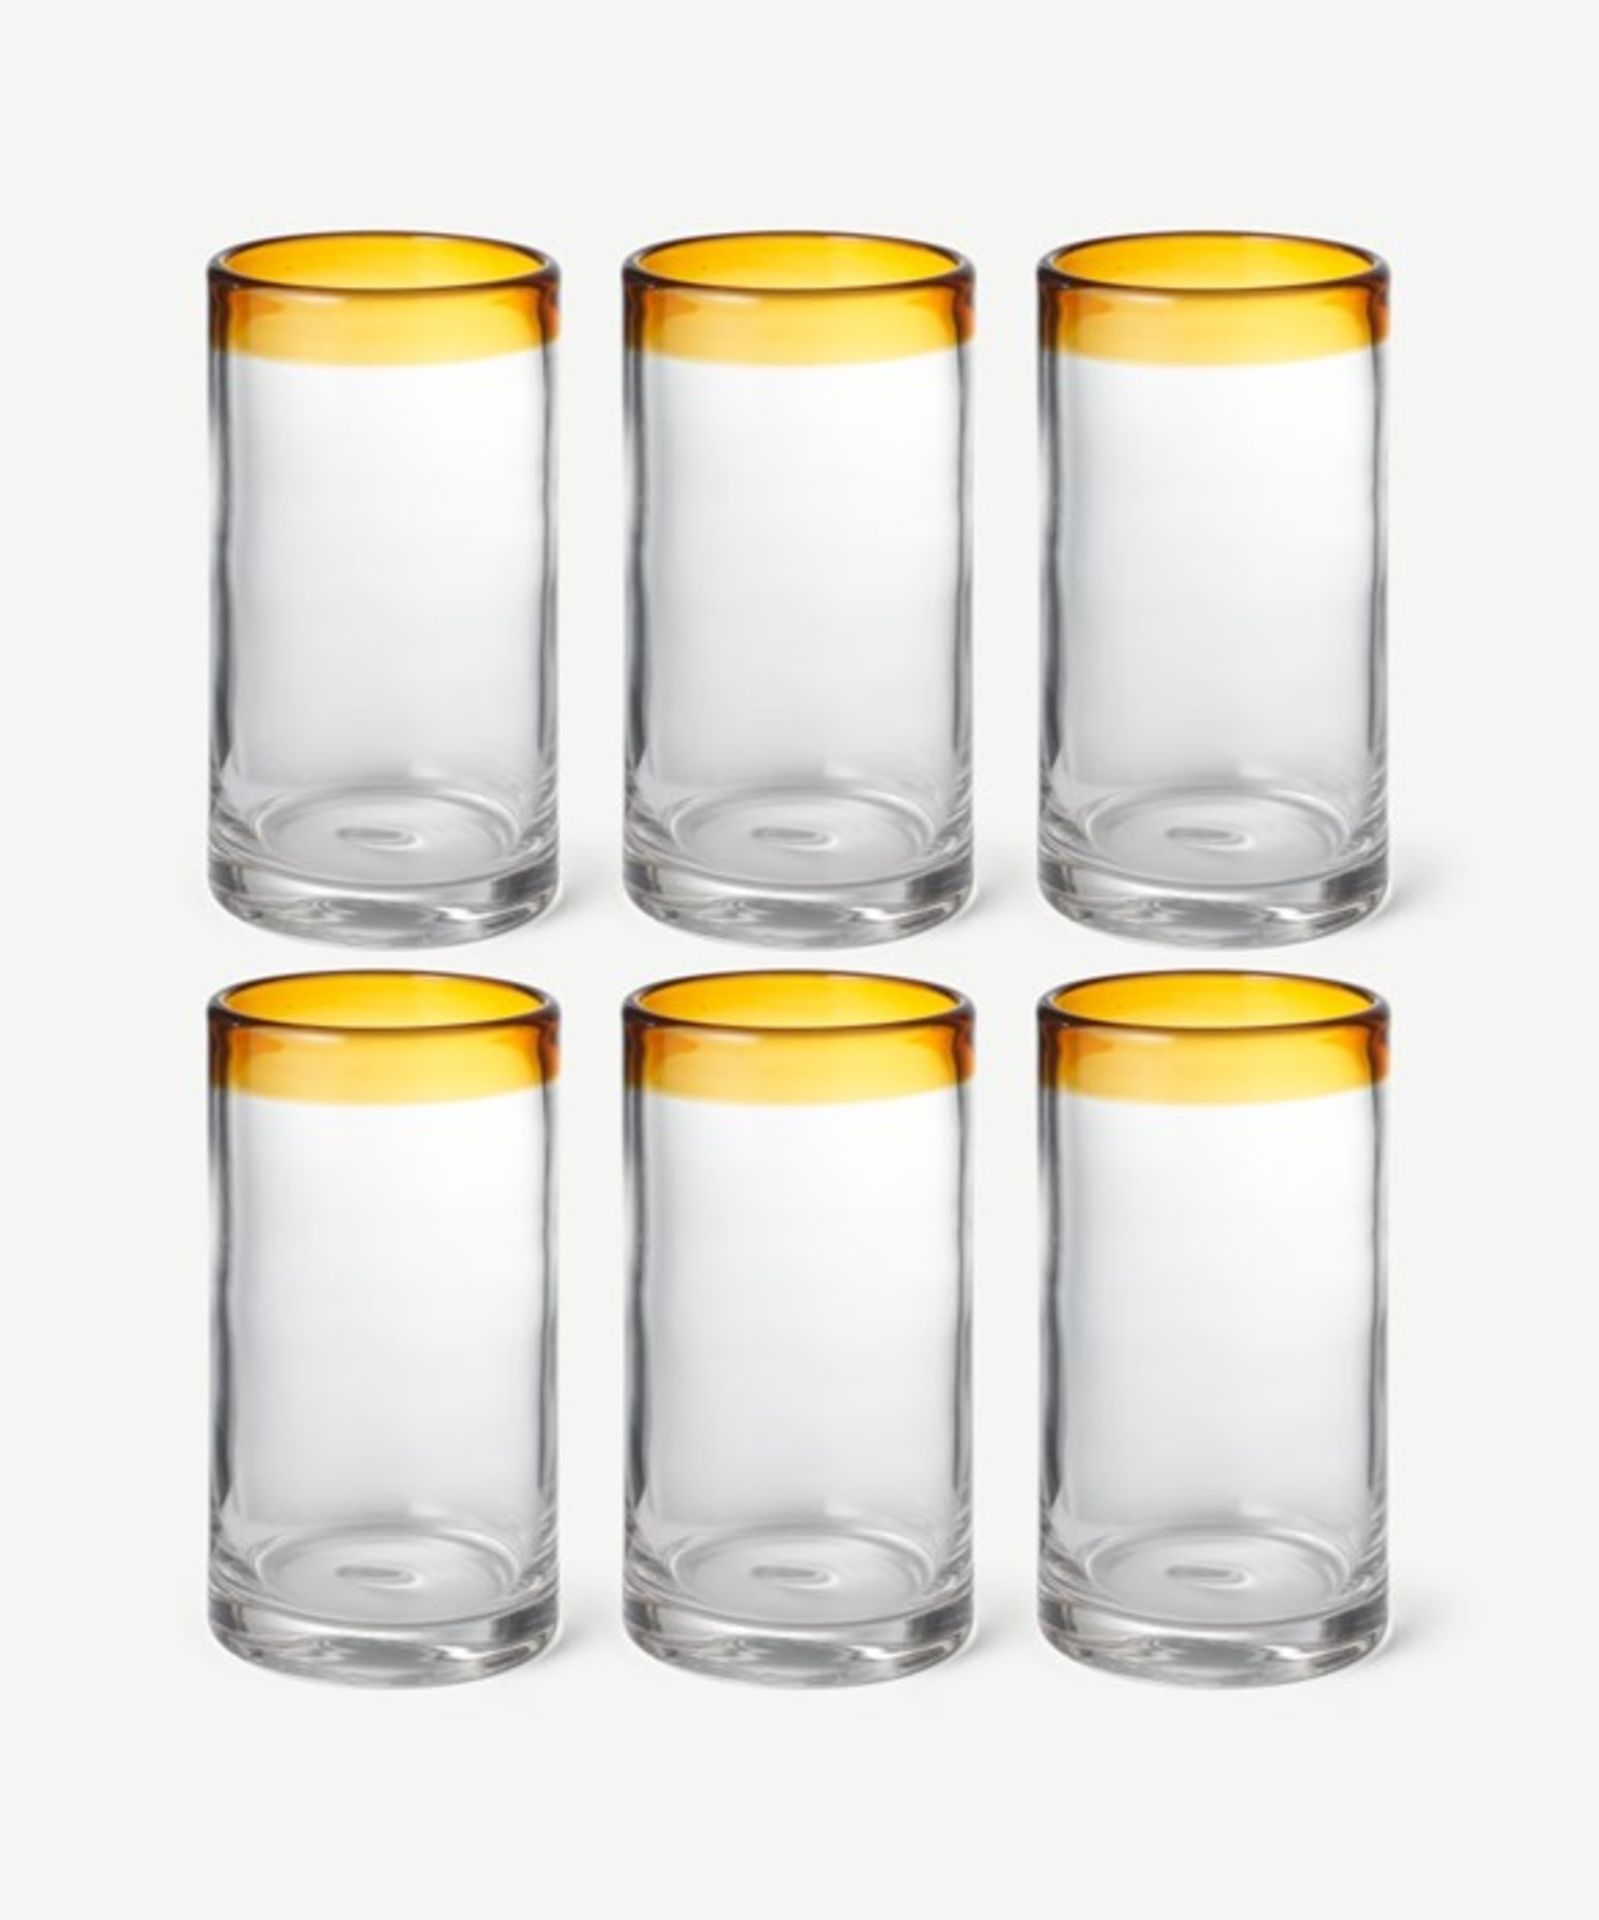 |1X|Made.com Kazan Set of 6 Rim Glass Highballs, Amber & Clear RRP Â£25|1j0474/14 -GSWKAZ002AMB-